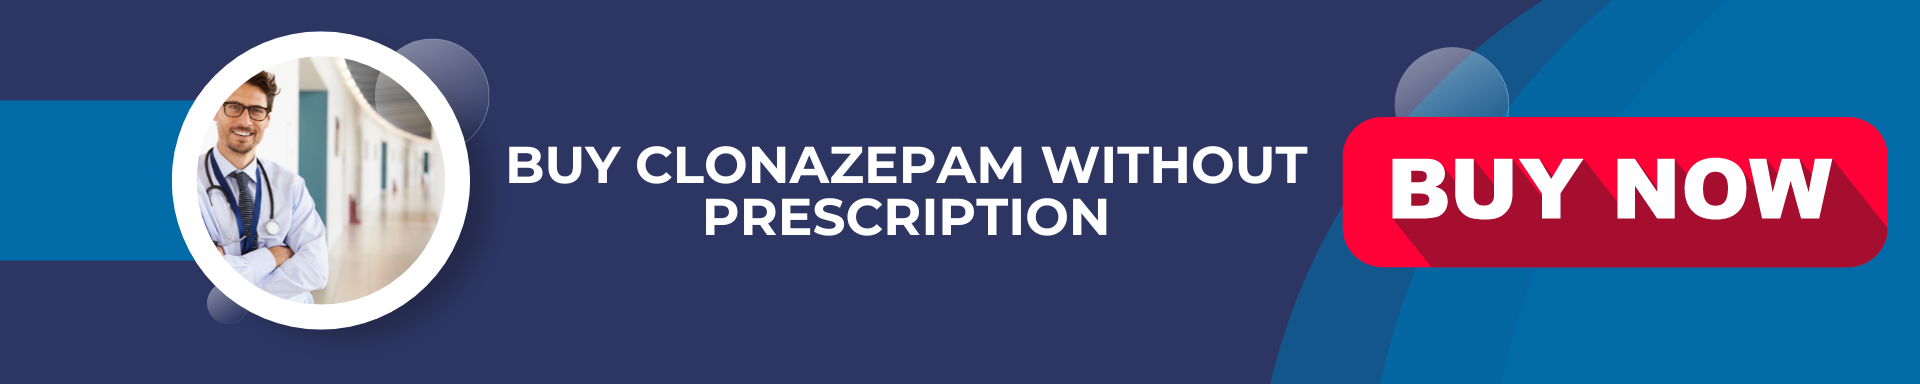 Buy Clonazepam without prescription